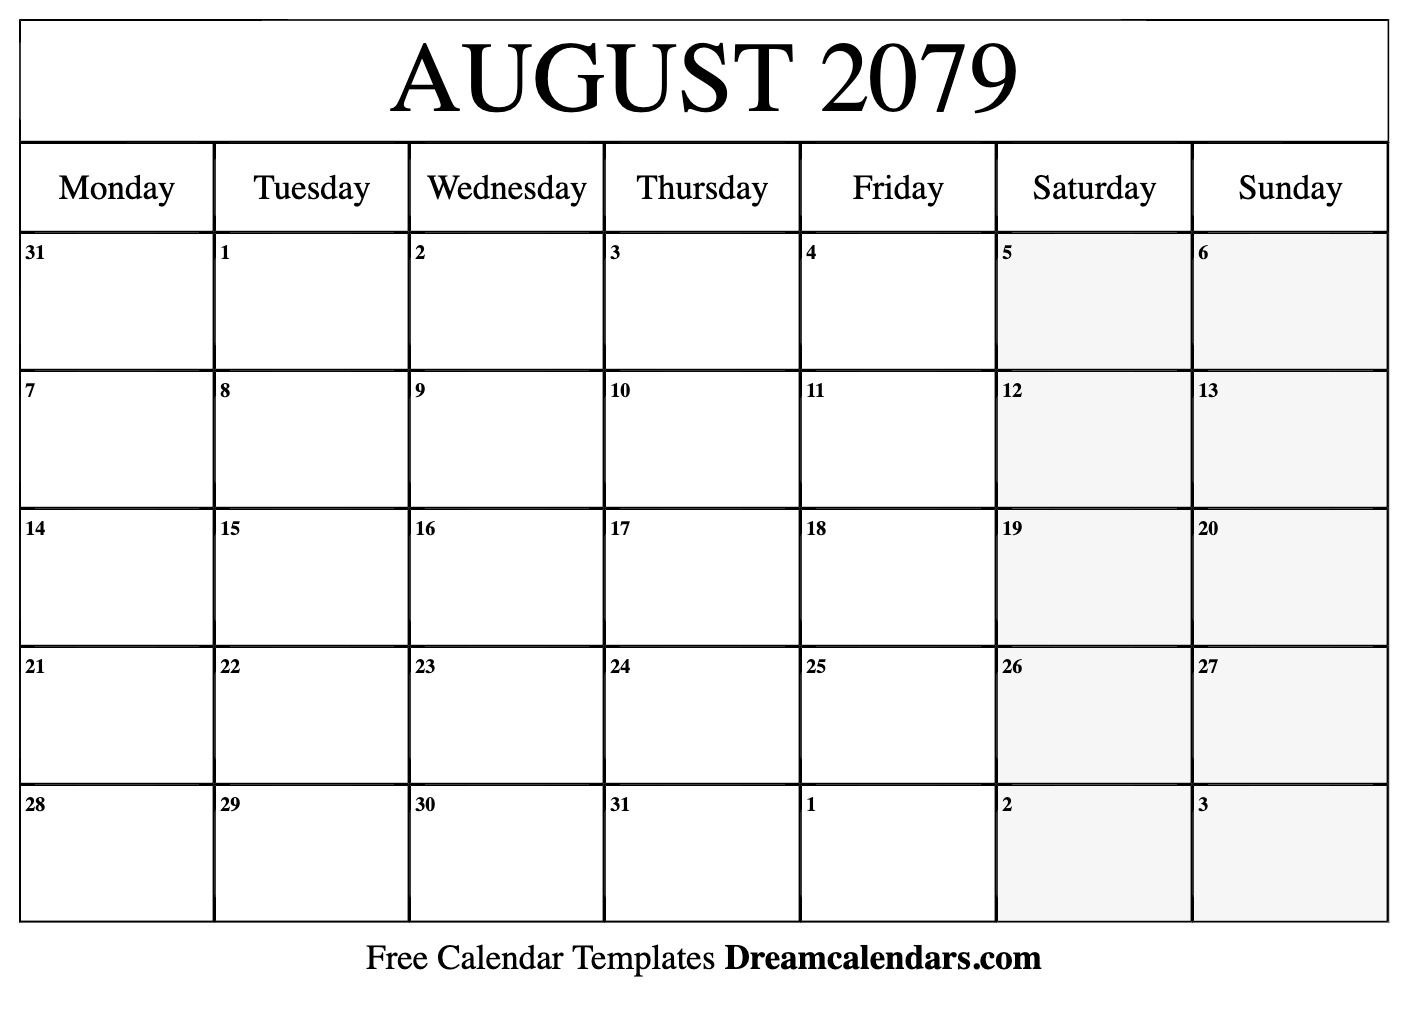 Free Blank August 2079 Printable Calendar